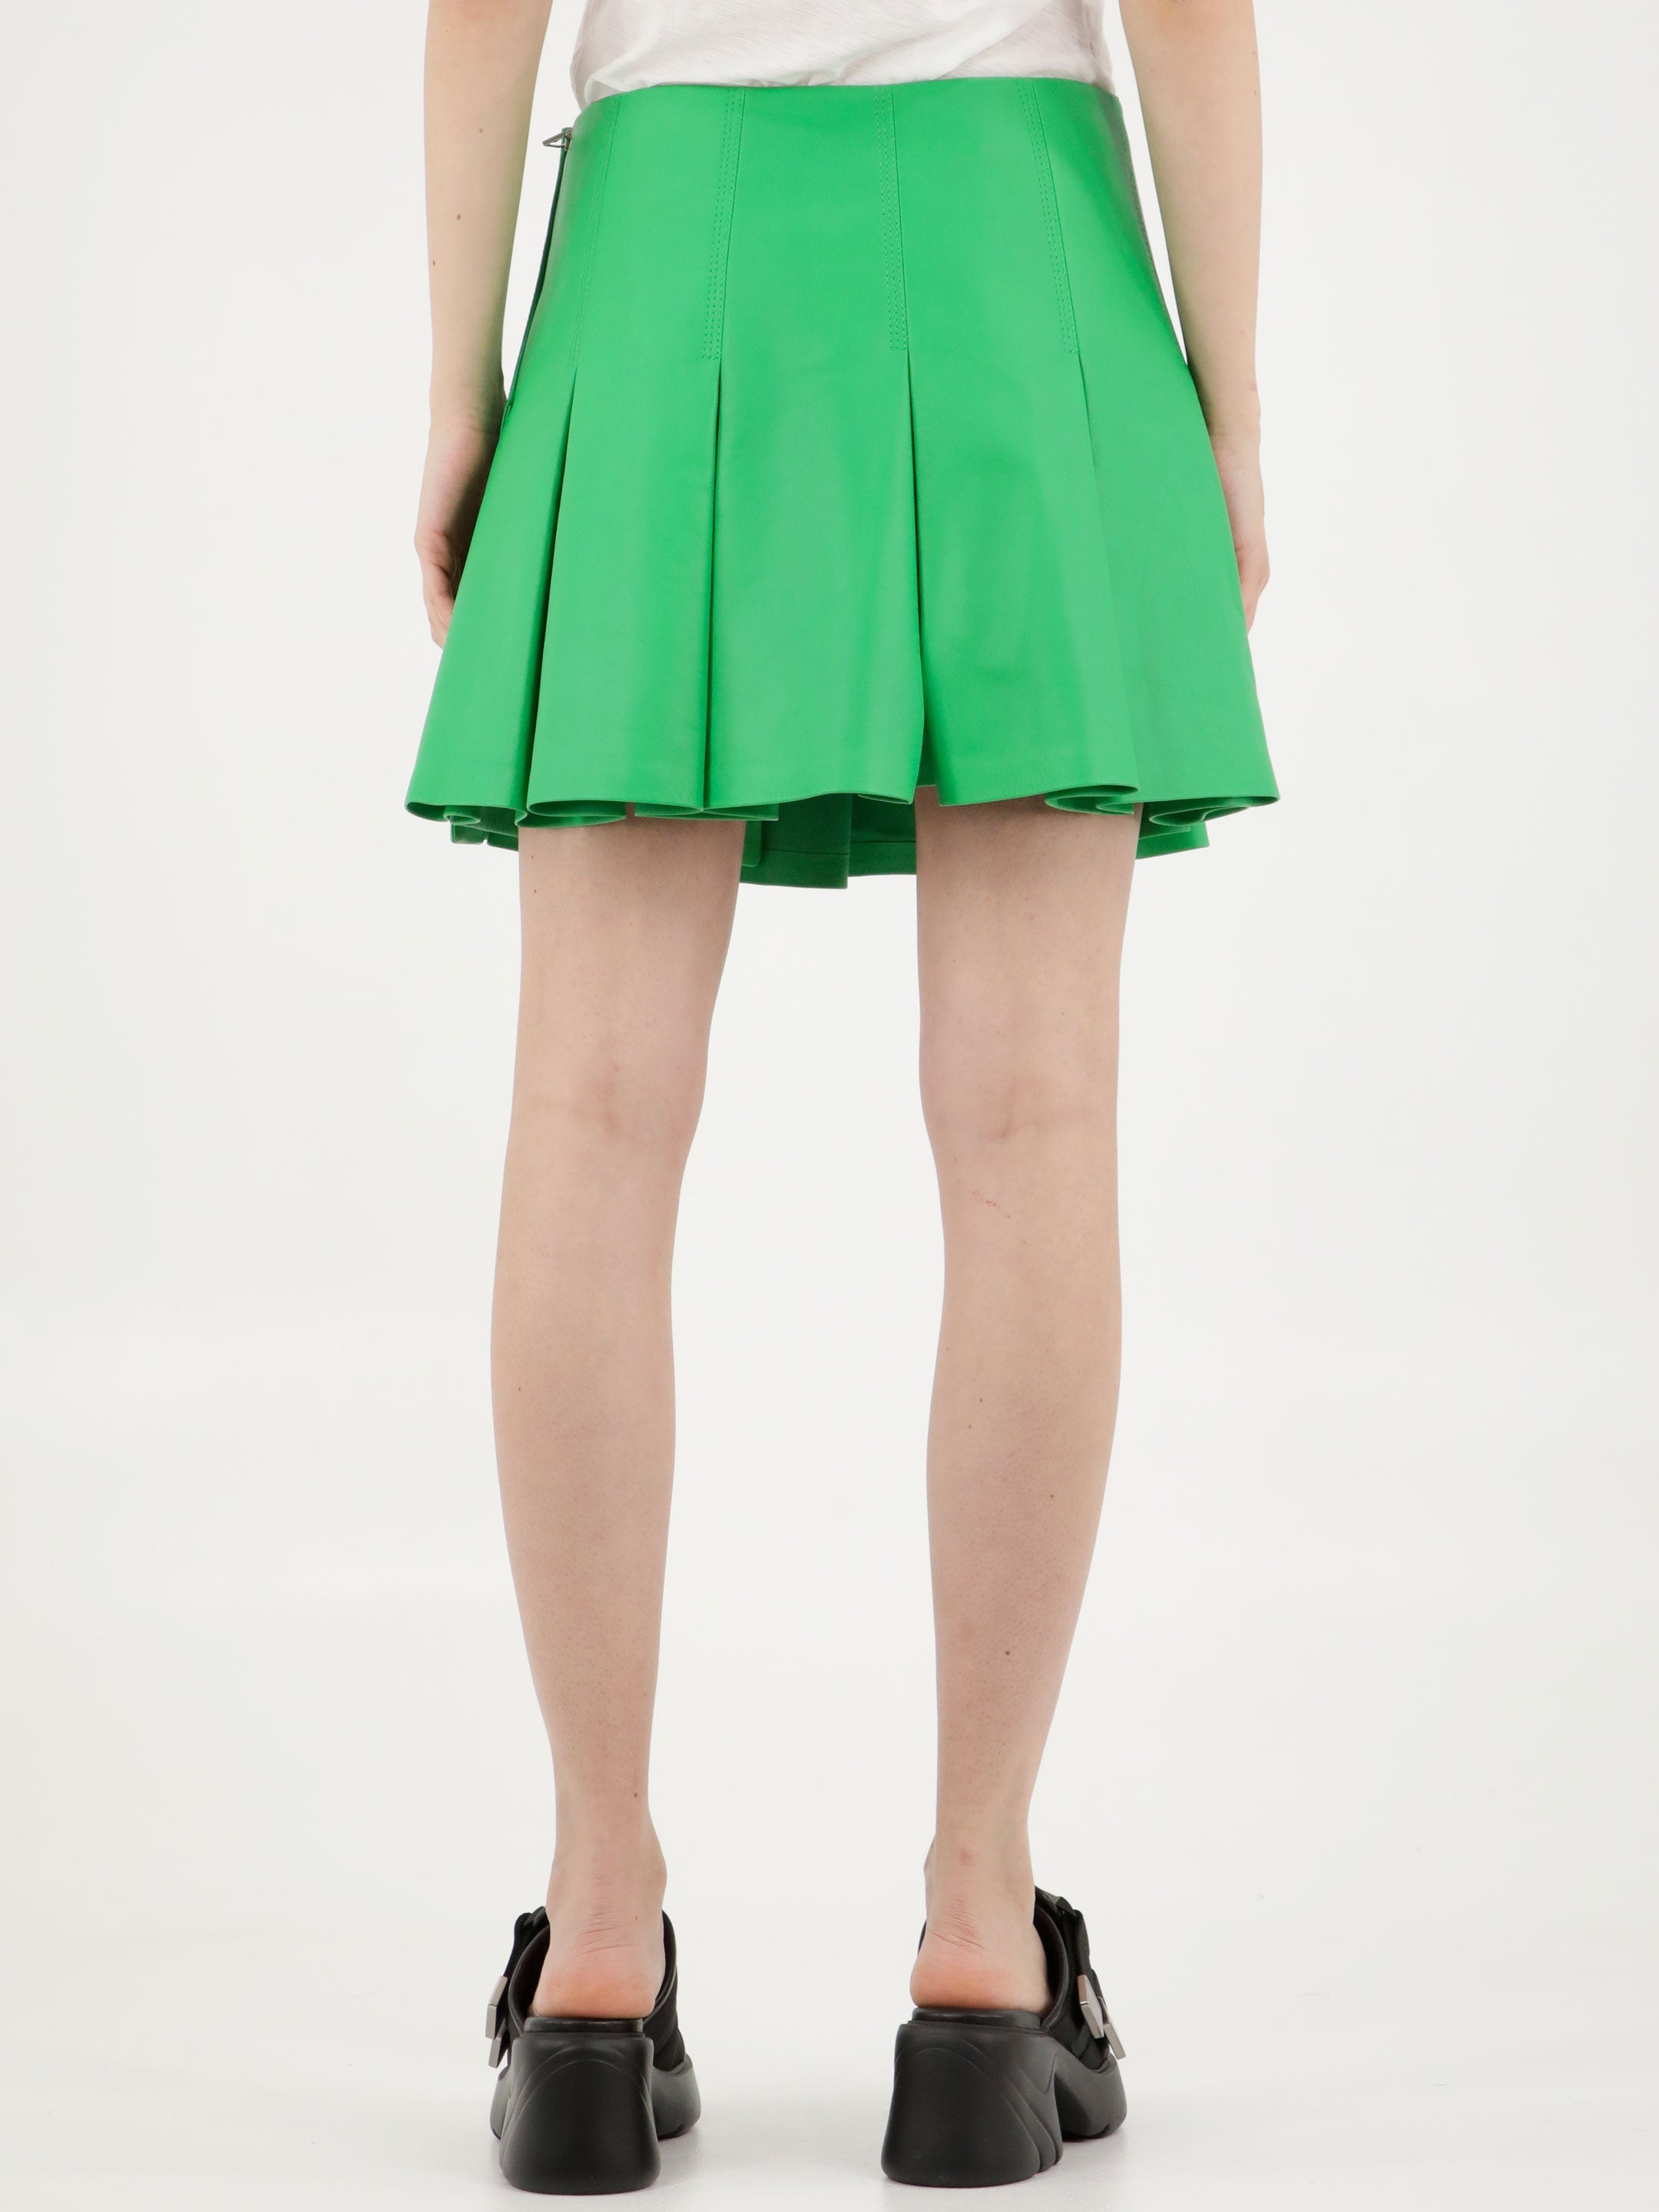 Green leather skirt